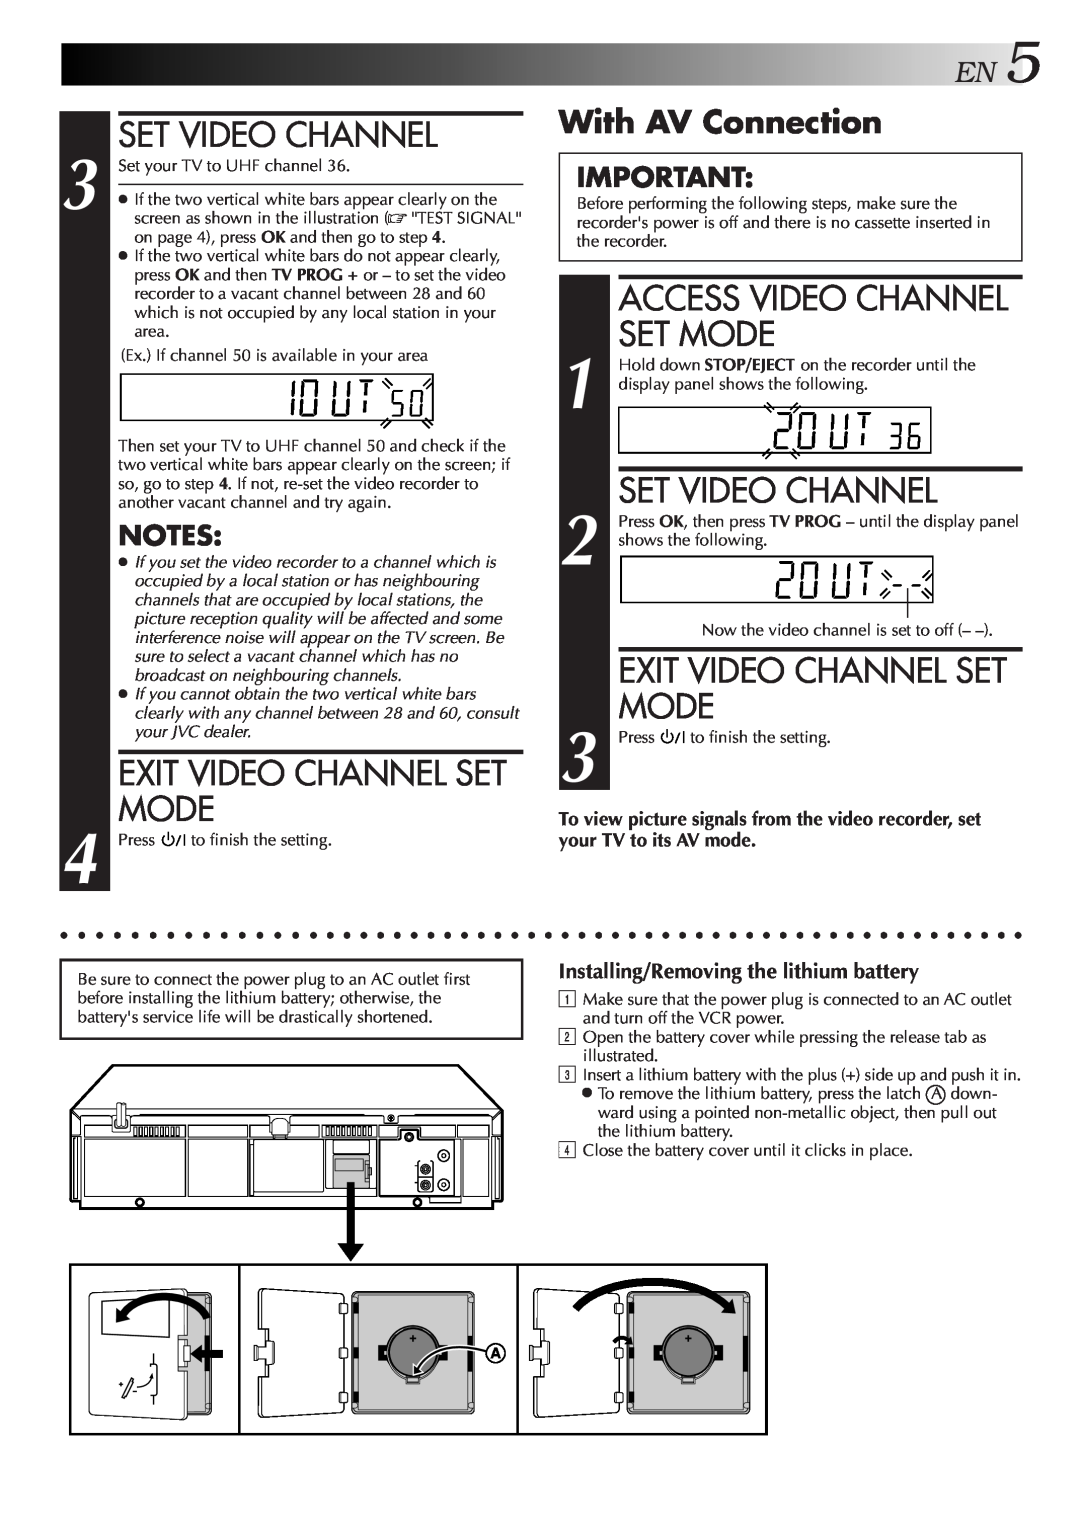 JVC HR-J455EA Set Video Channel, Exit Video Channel Set Mode, With AV Connection, Access Video Channel Set Mode 